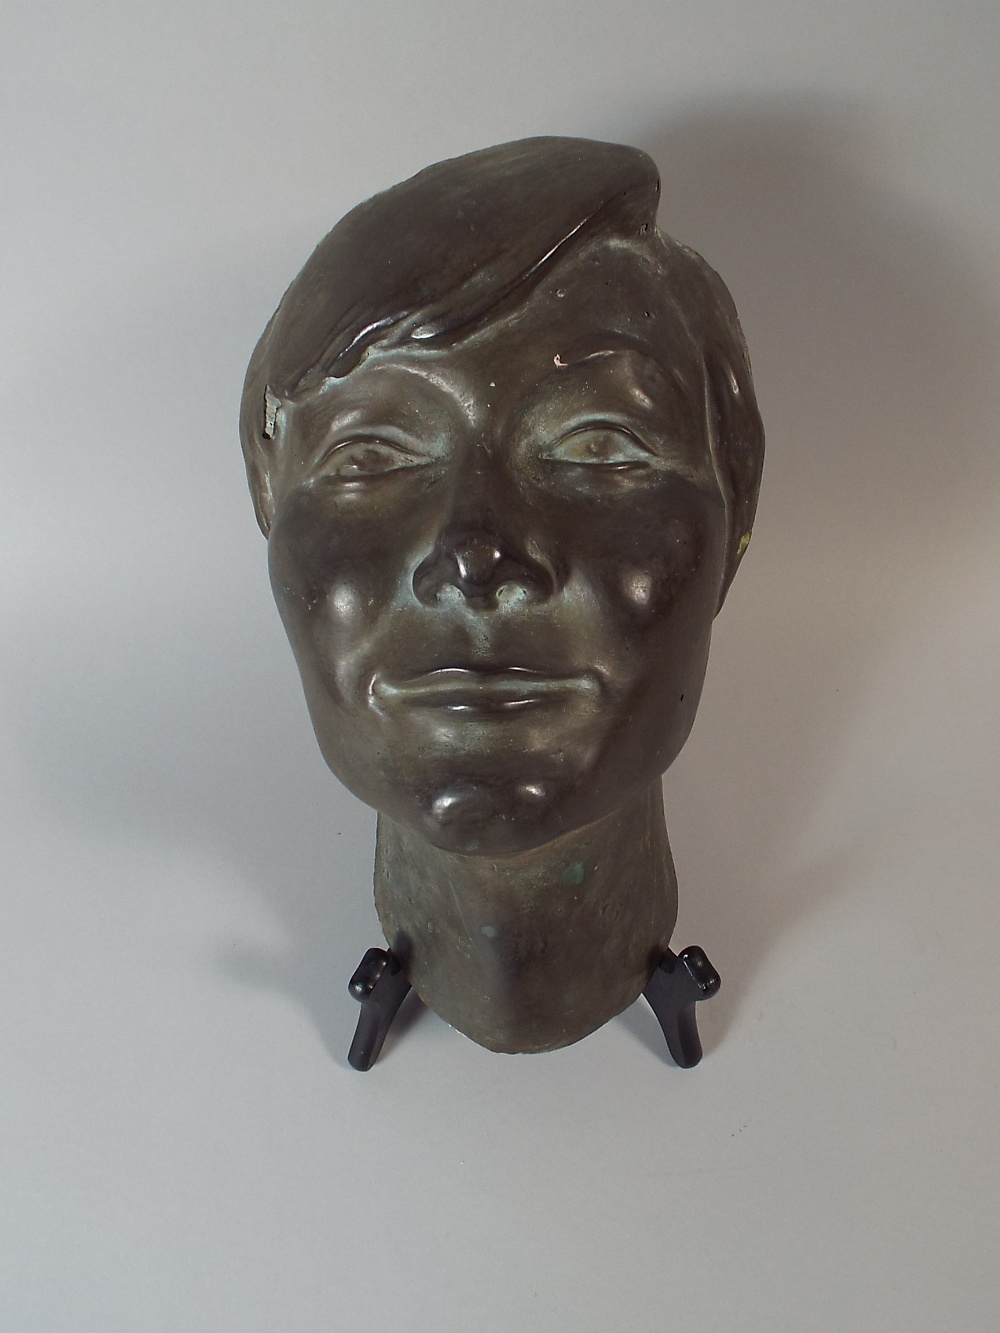 An Interesting mid 20th Century Glass Fibre Sculpture of a Woman's Face,